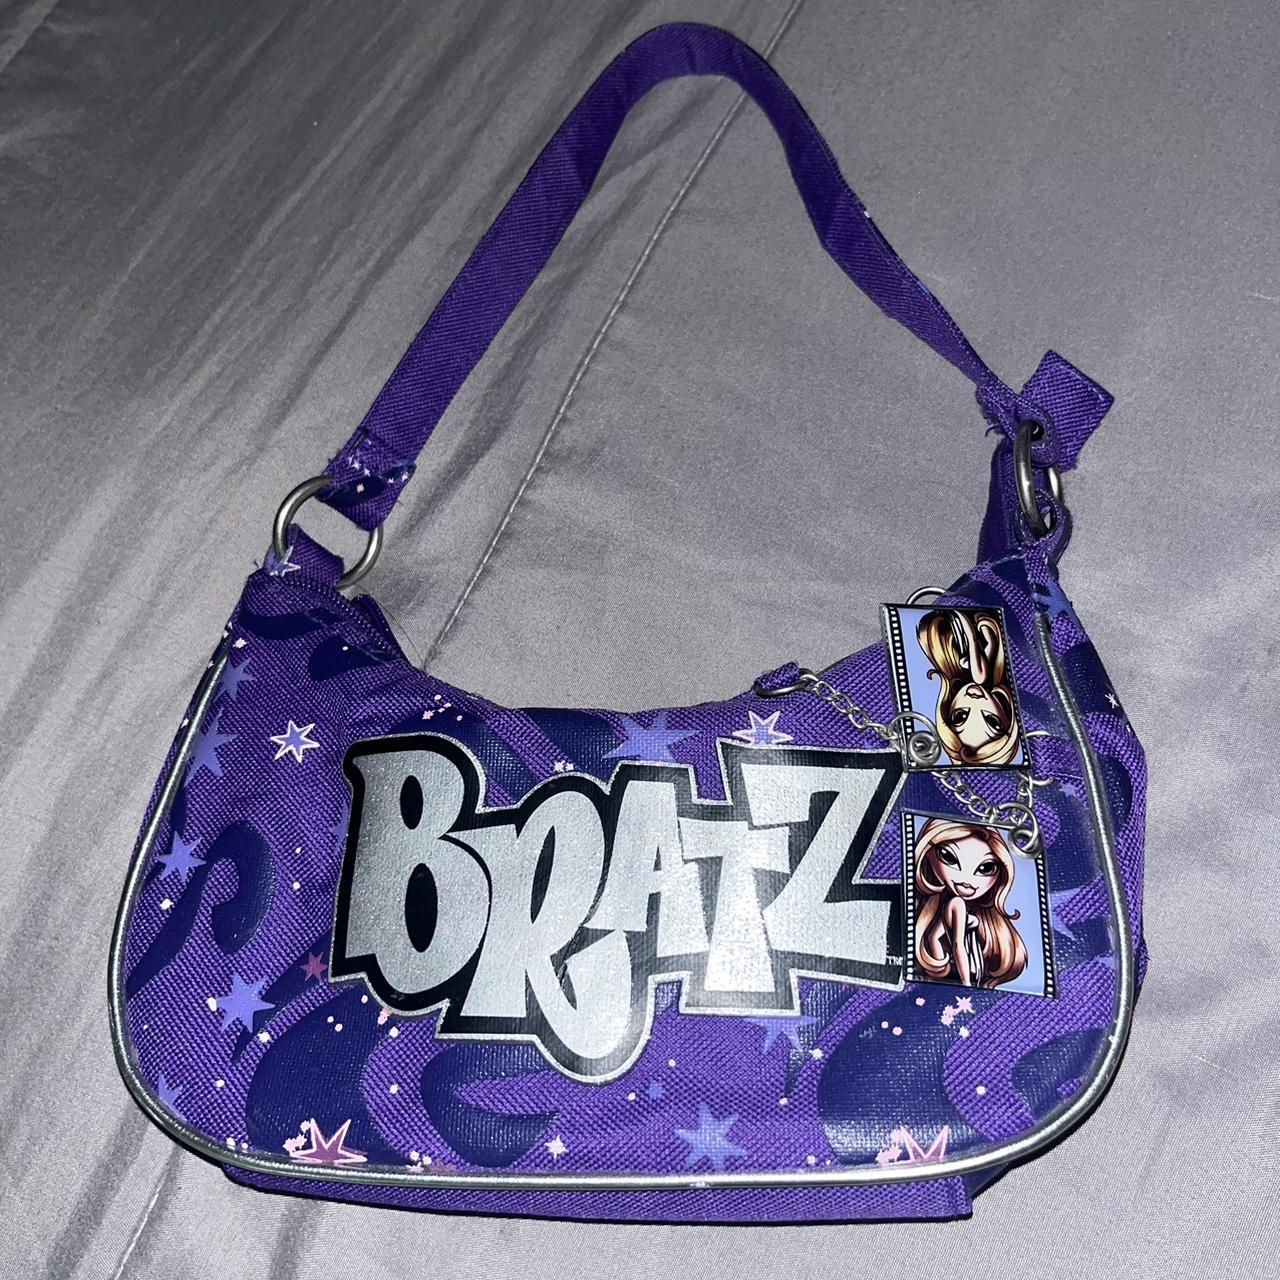 Women's Bratz Bags & Purses, New & Used